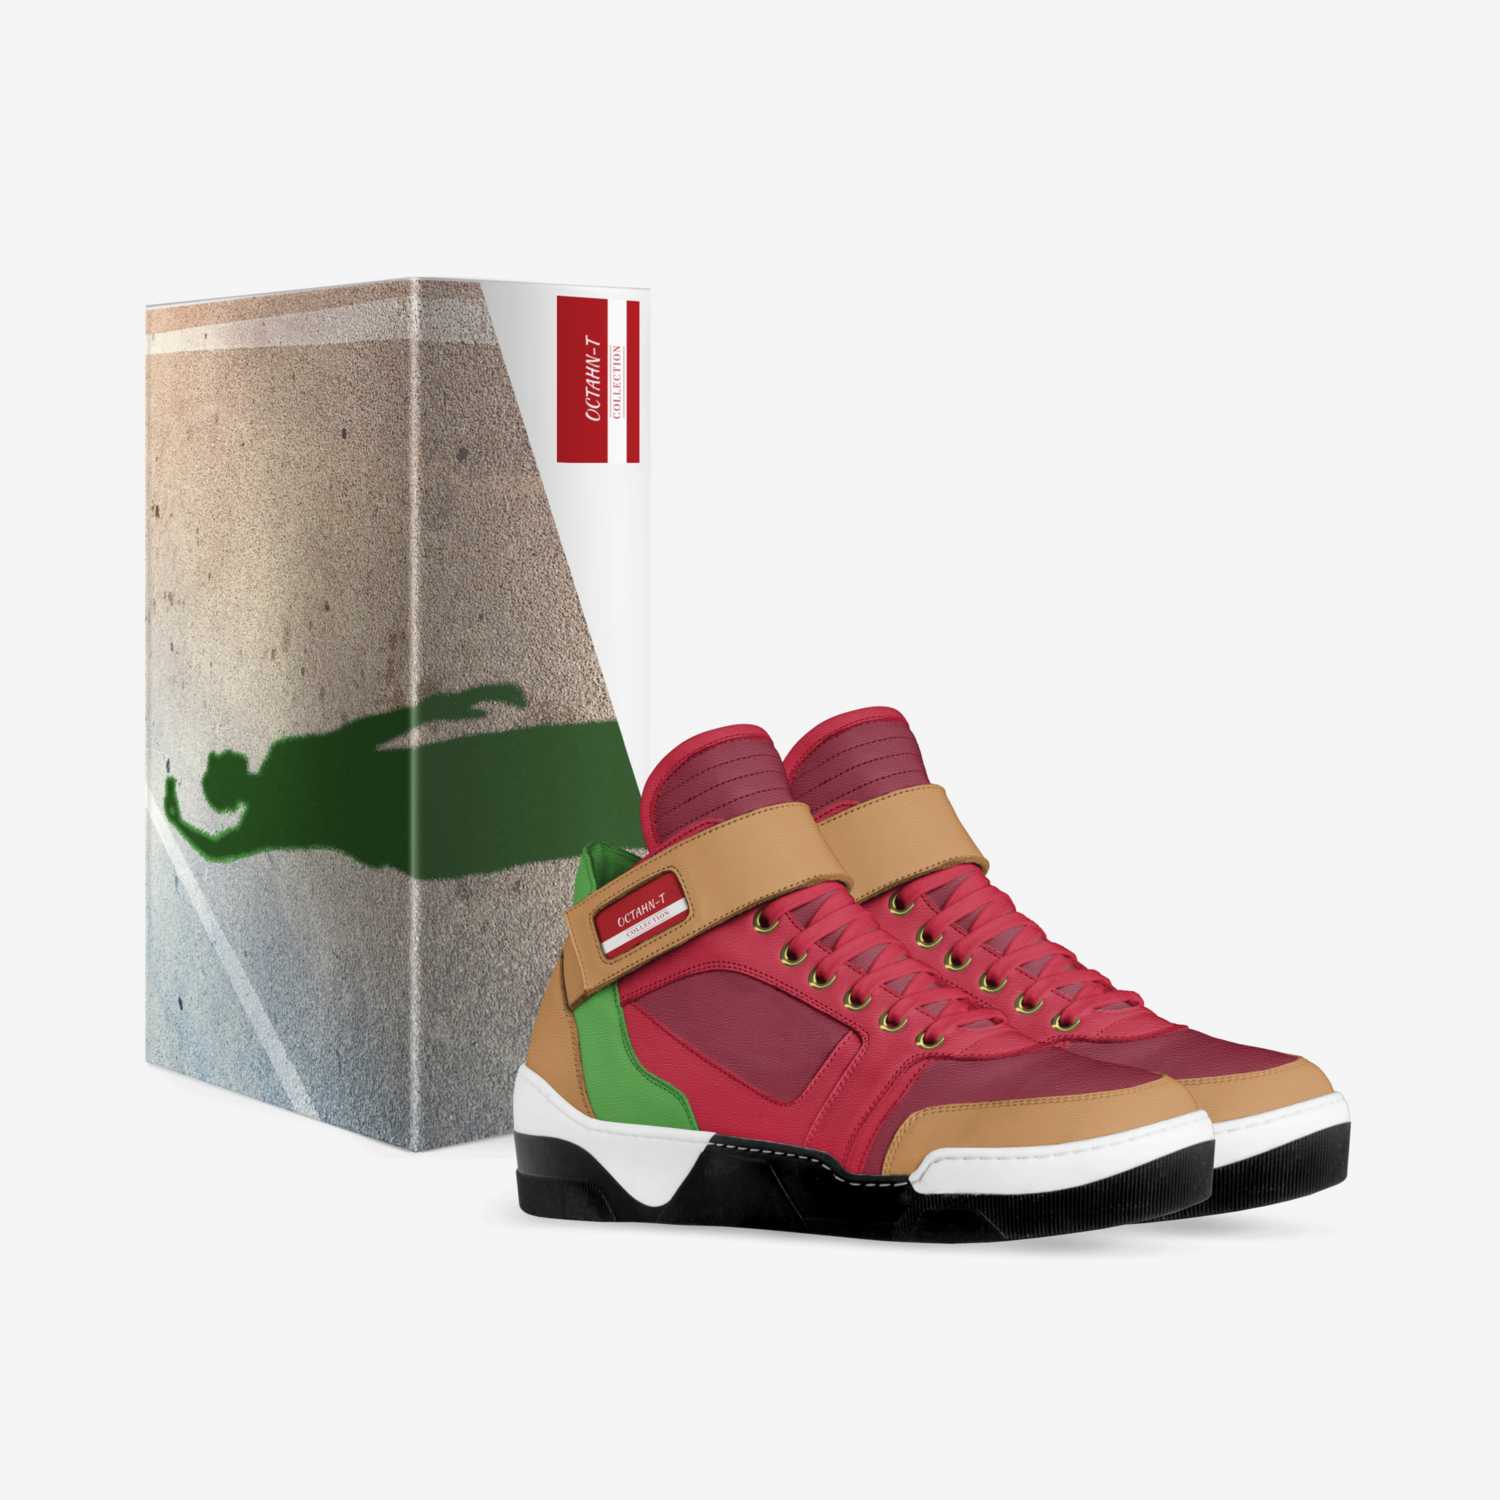 OCTAHN-T custom made in Italy shoes by Thaddeus Hancock | Box view